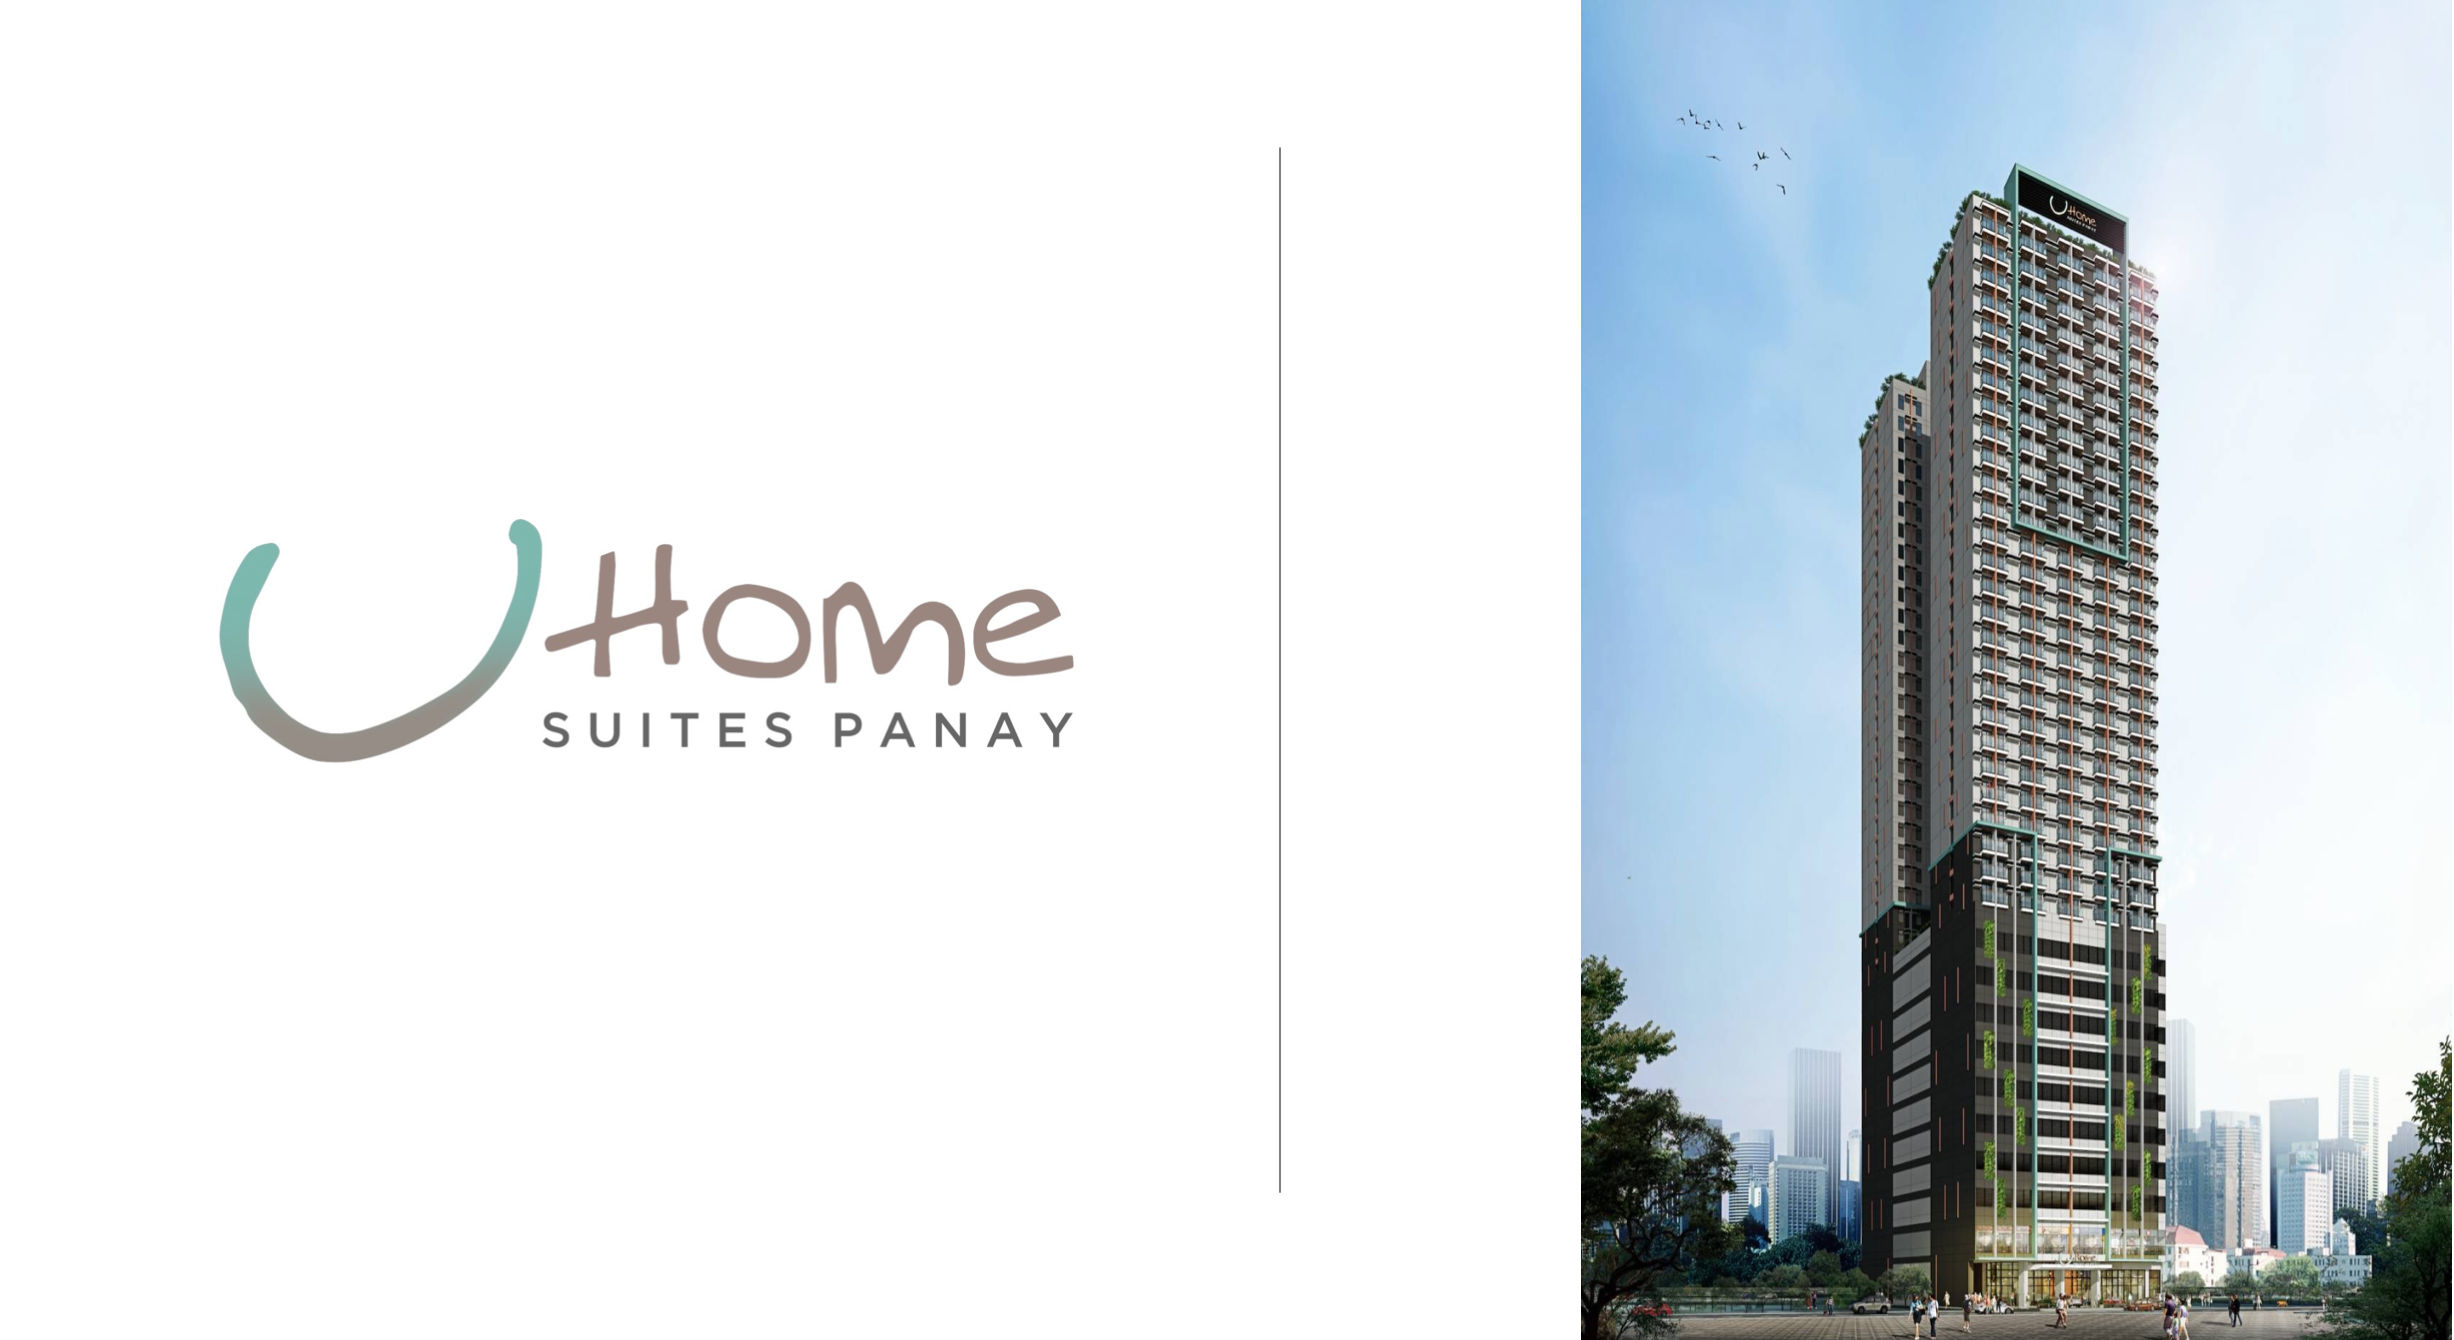 Uhome Suites Panay Quezon City